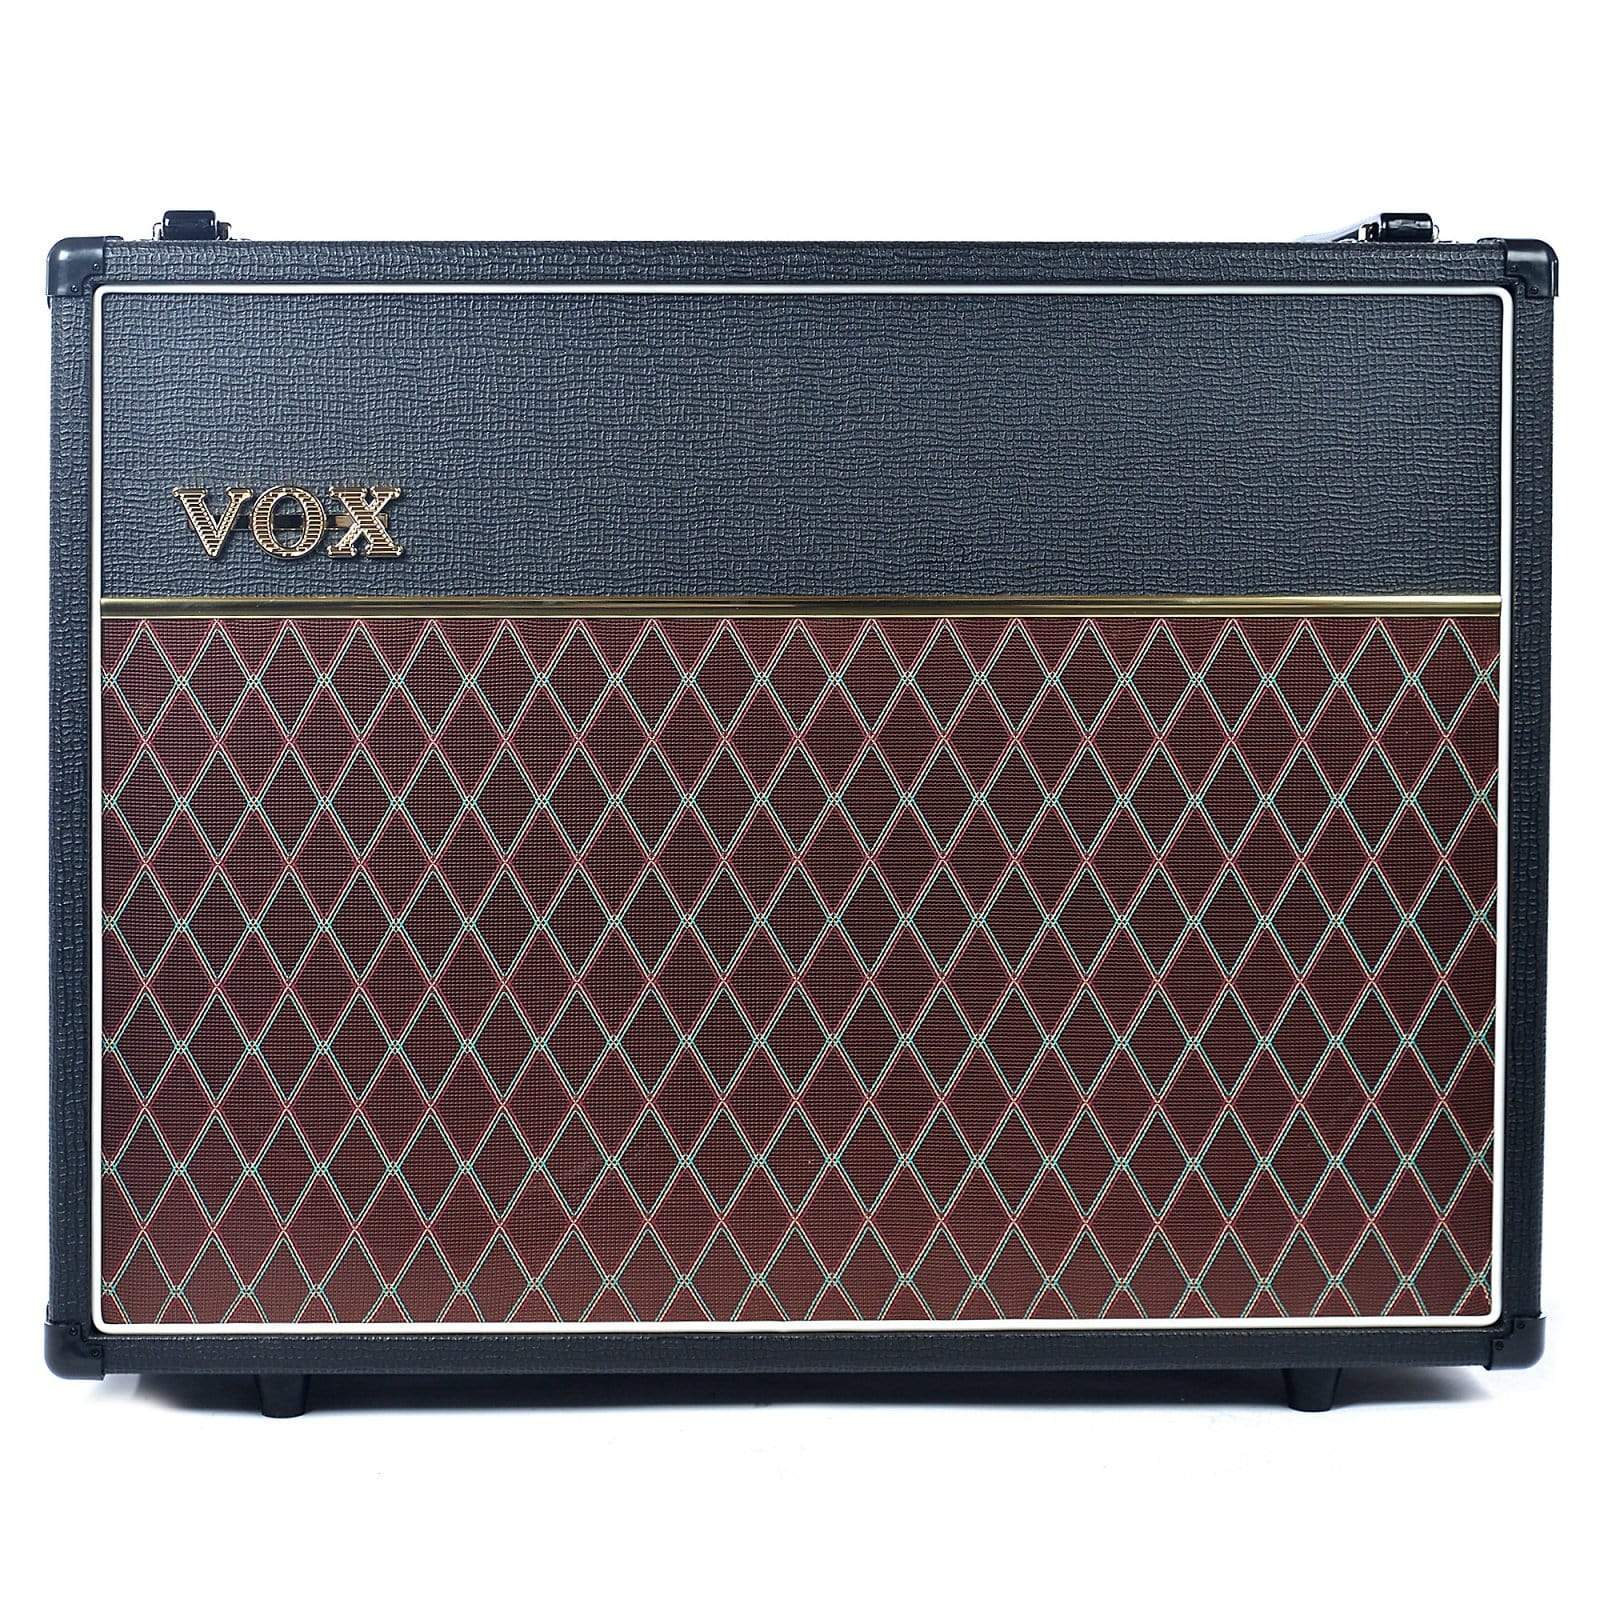 Vox V212c 2x12 Speaker Cabinet W